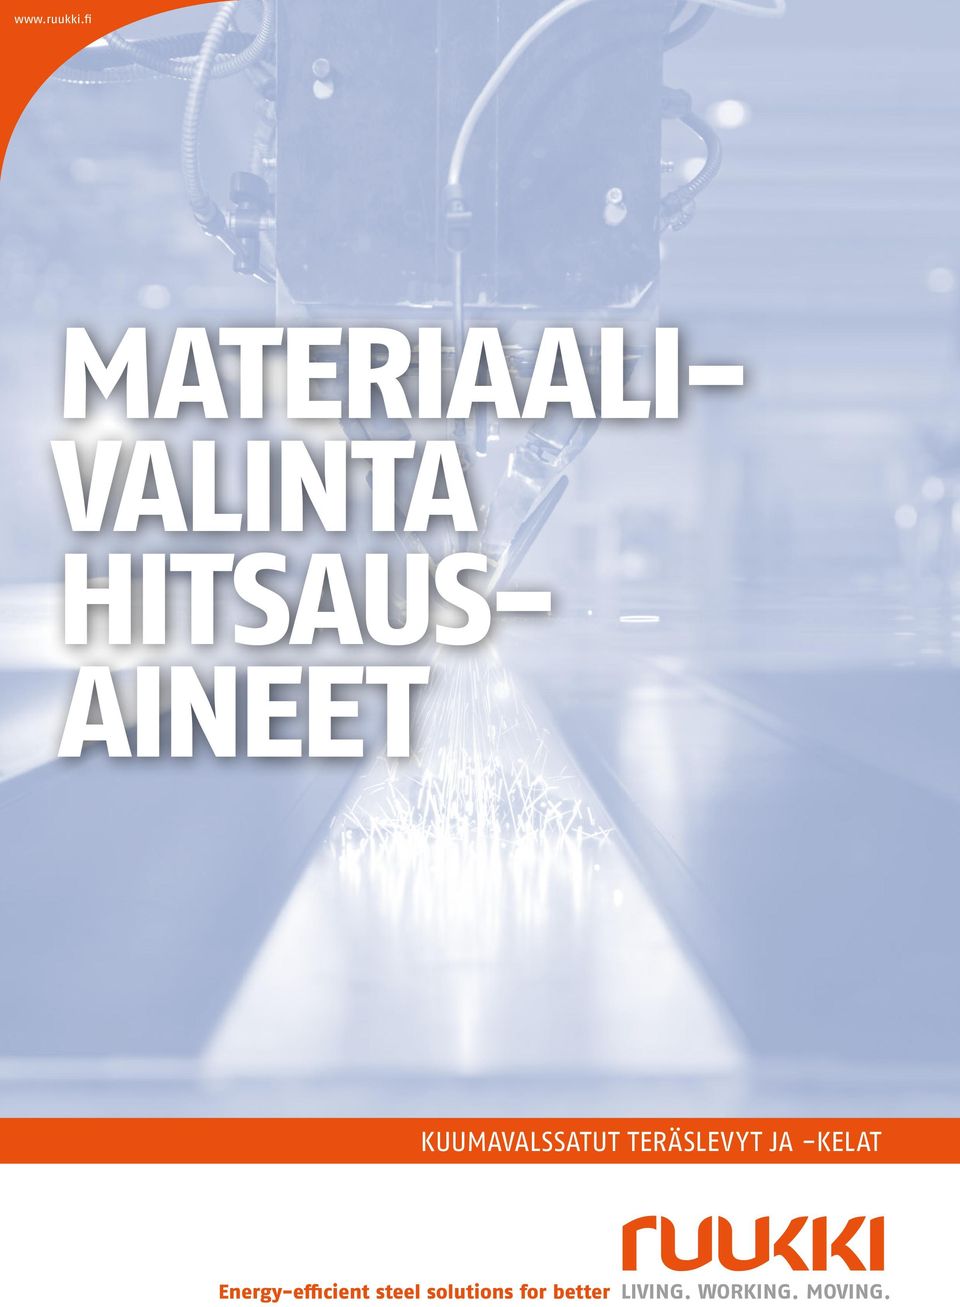 VALINTA HITSAUS-